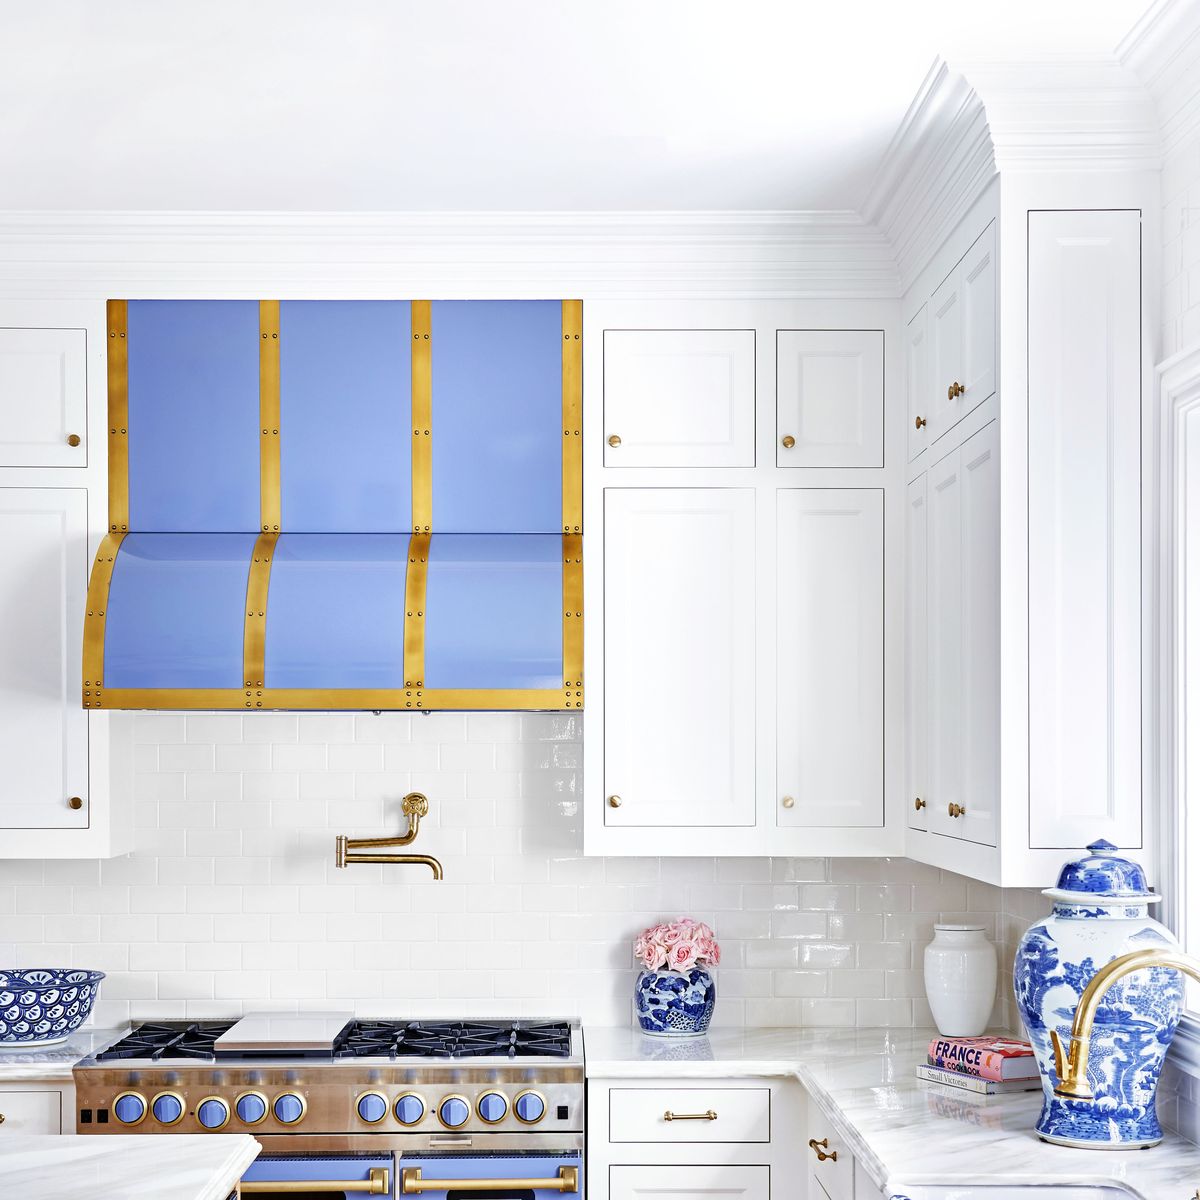 White and Gold Kitchen with Bertazzoni Range - Contemporary - Kitchen